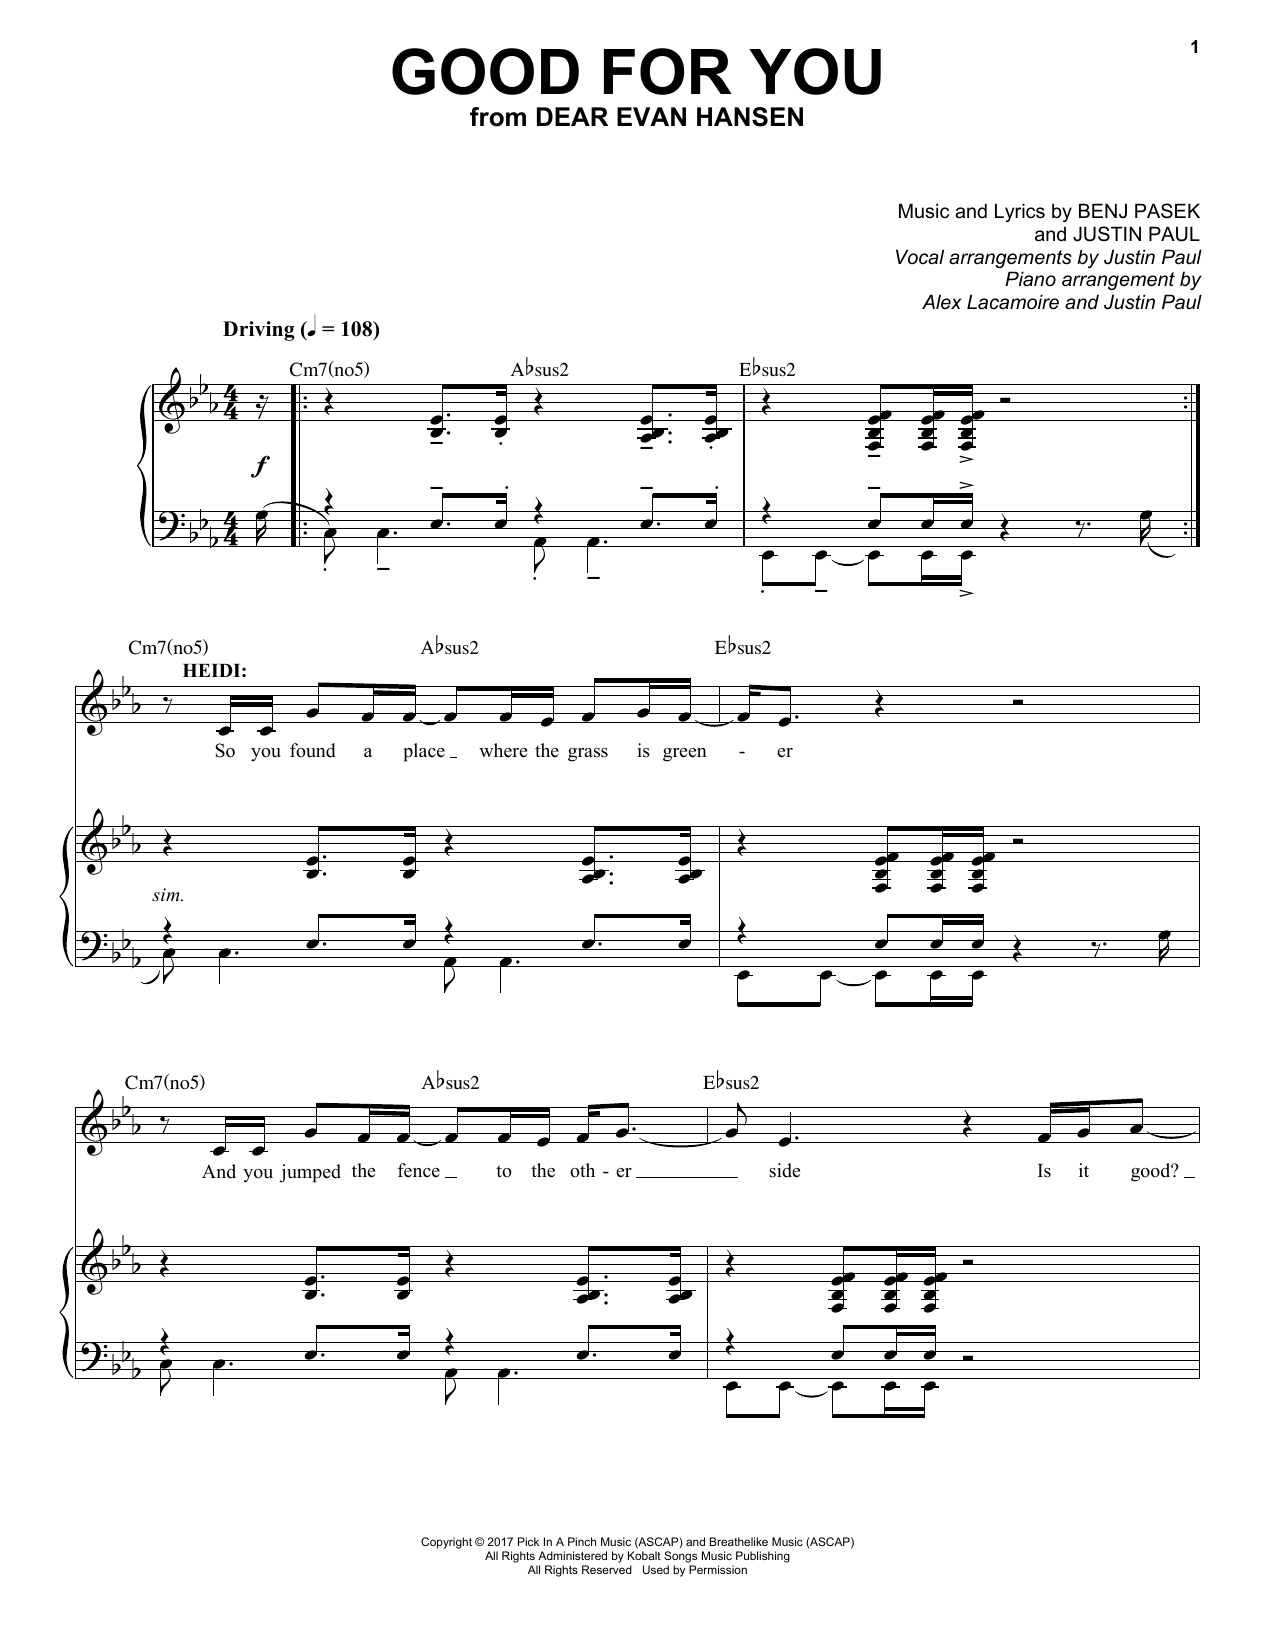 Pasek & Paul Good For You (from Dear Evan Hansen) Sheet Music Notes & Chords for Guitar Chords/Lyrics - Download or Print PDF